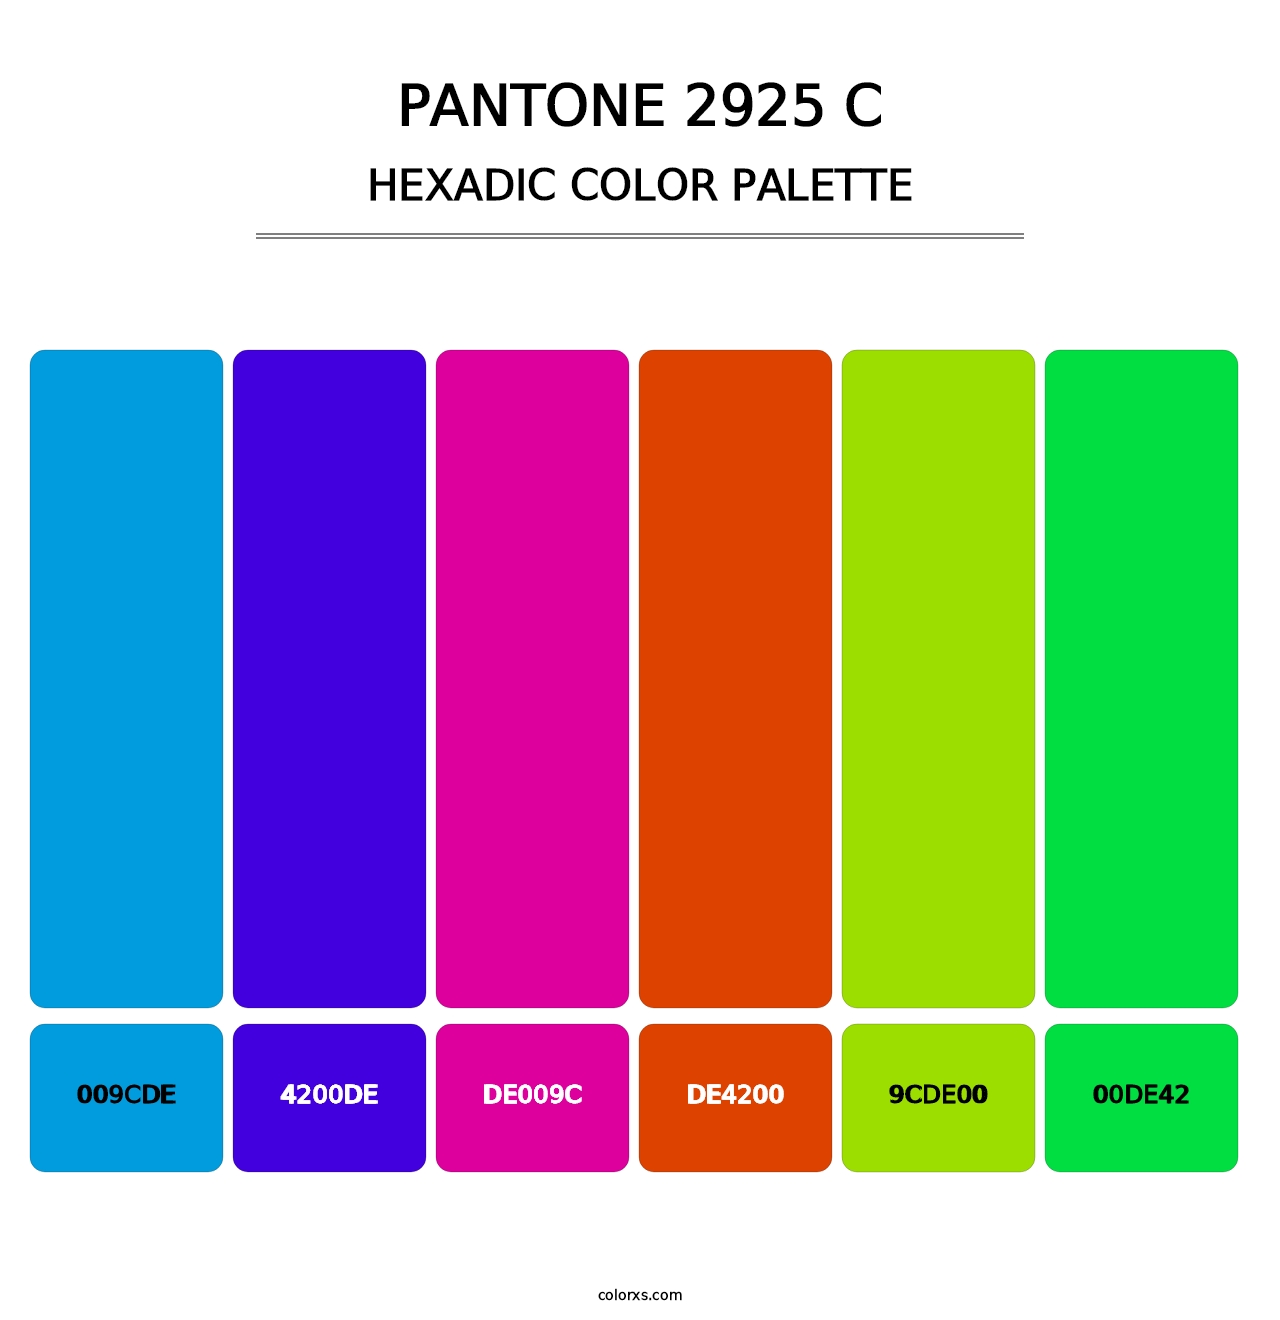 PANTONE 2925 C - Hexadic Color Palette